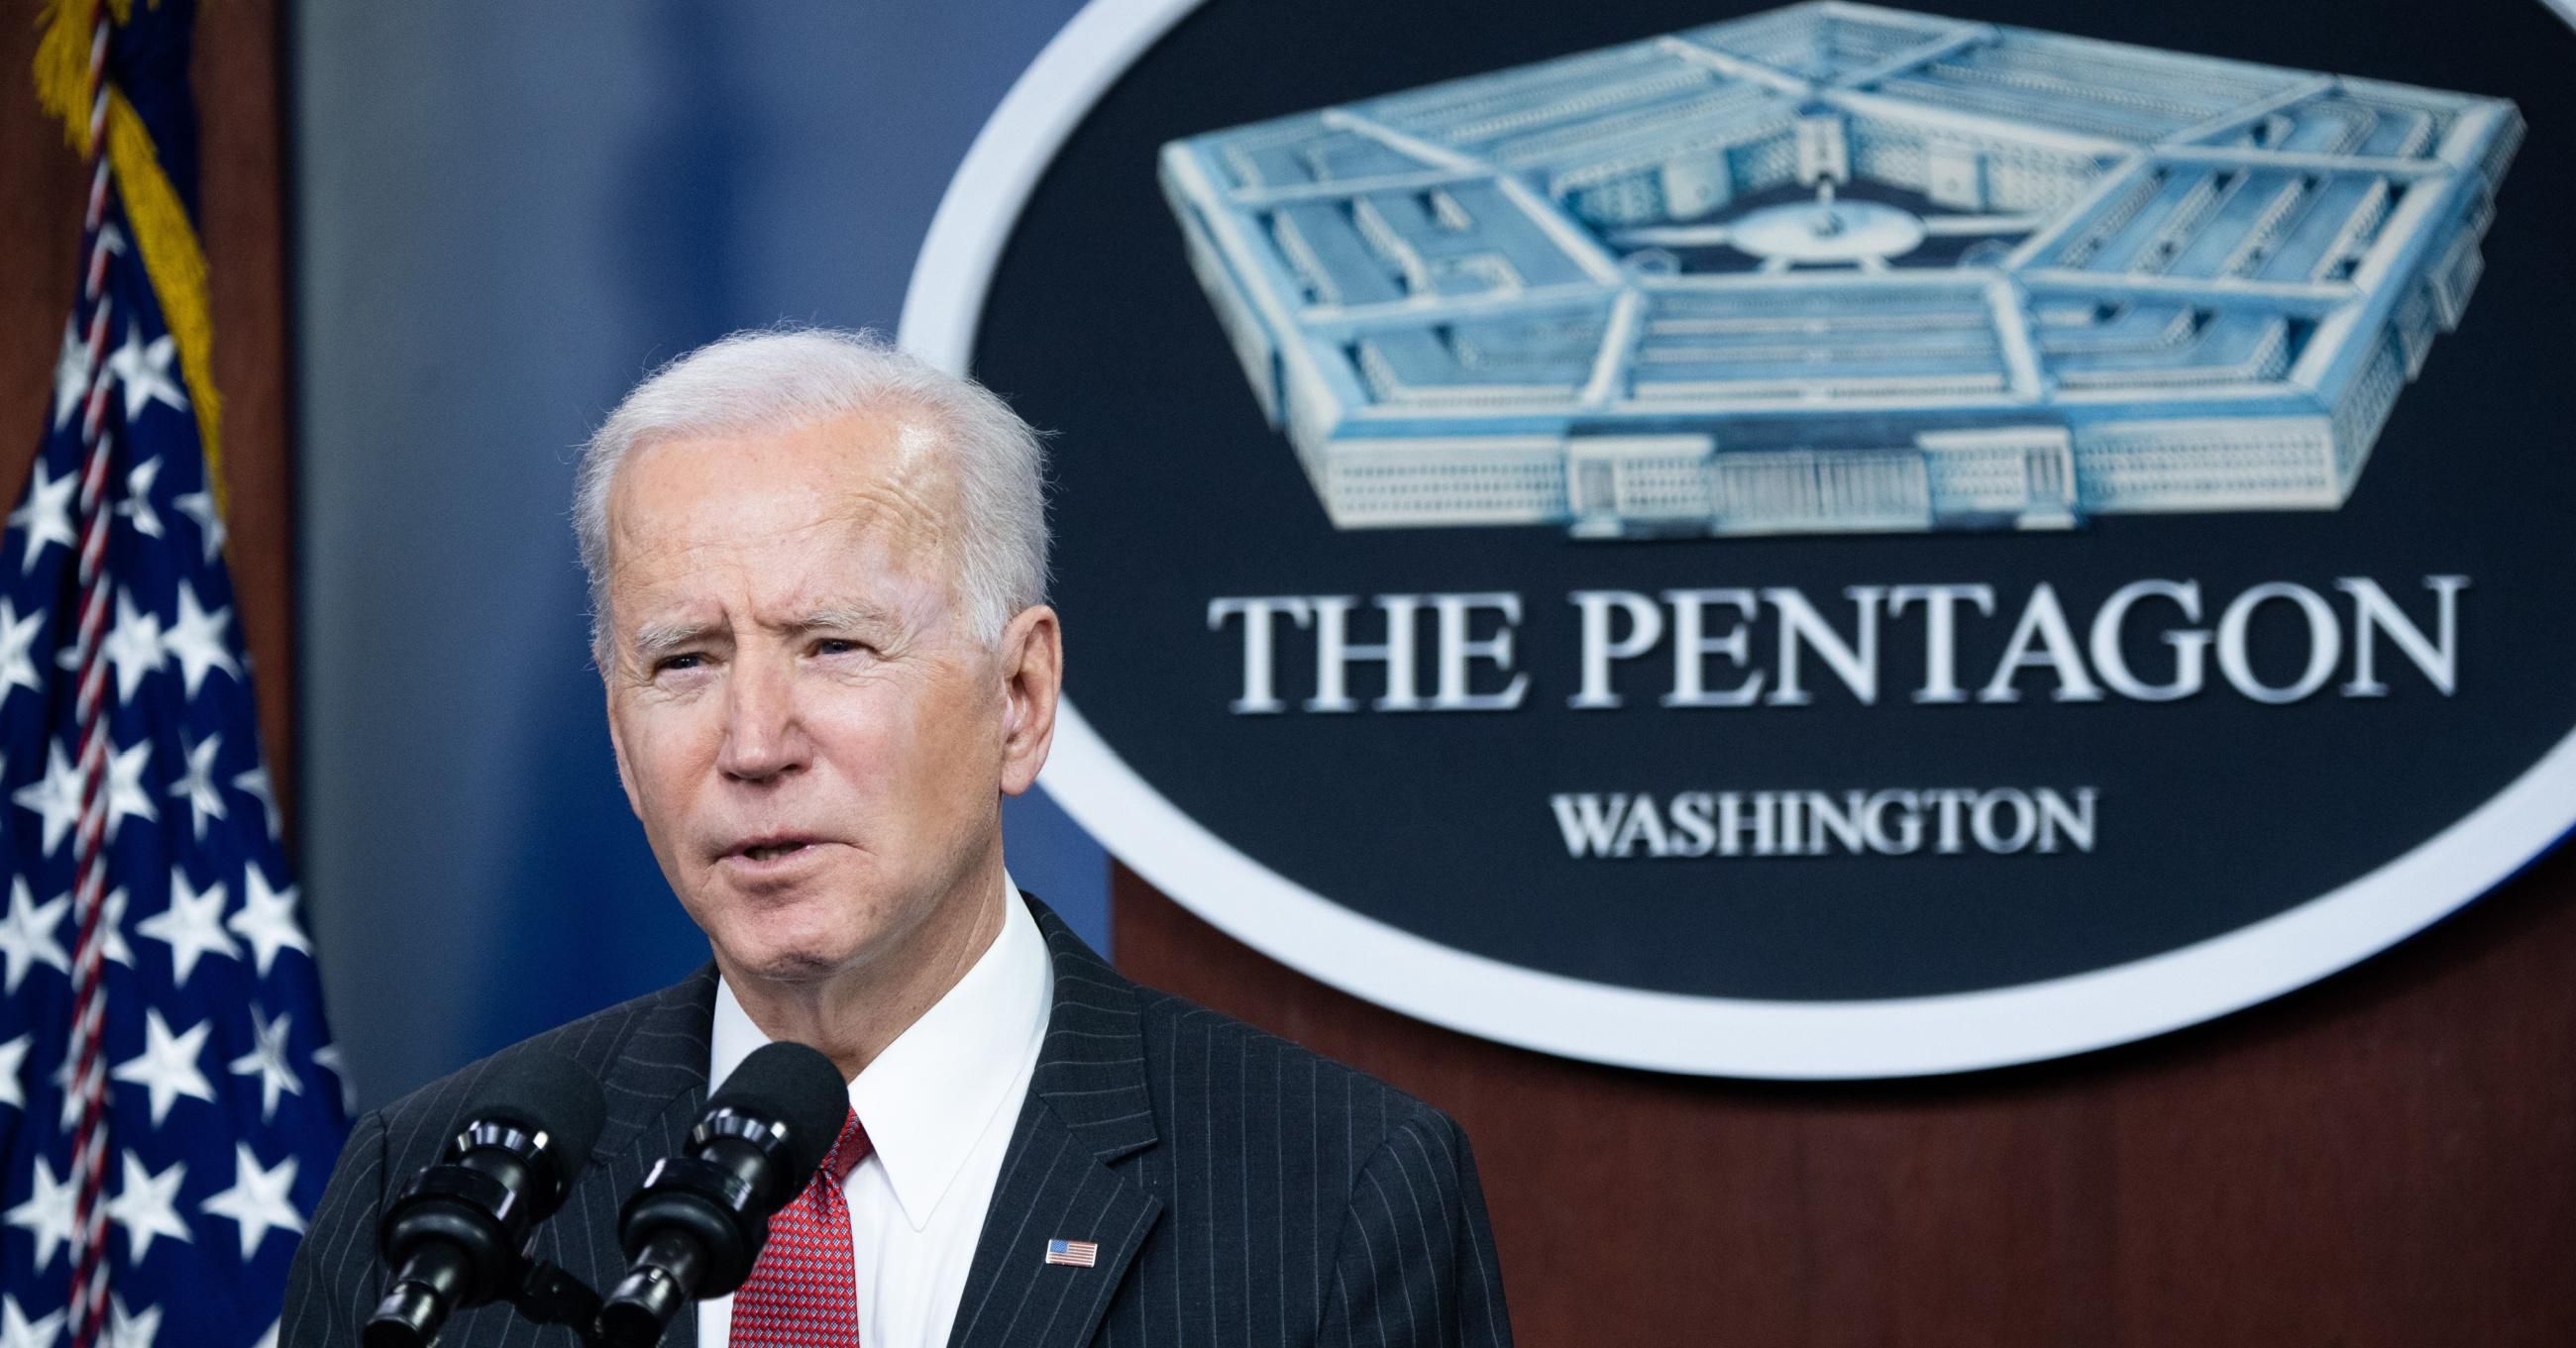 President Joe Biden speaks during a visit to the Pentagon in Washington, D.C. on February 10, 2021.